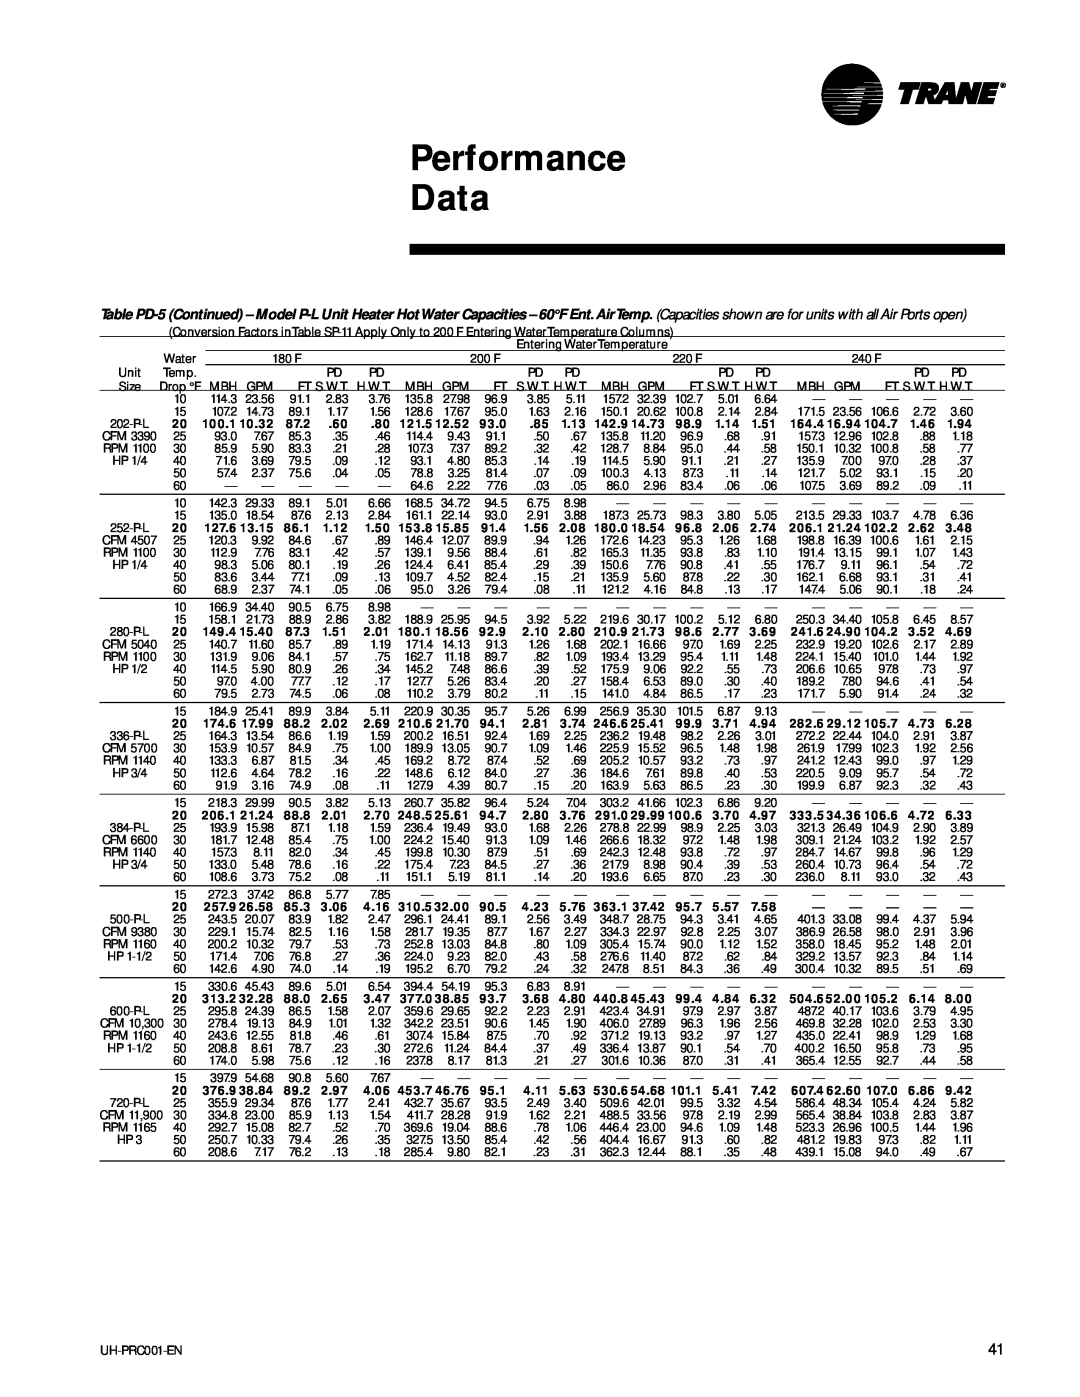 Trane UH-PRC001-EN manual Performance Data, 100.1 